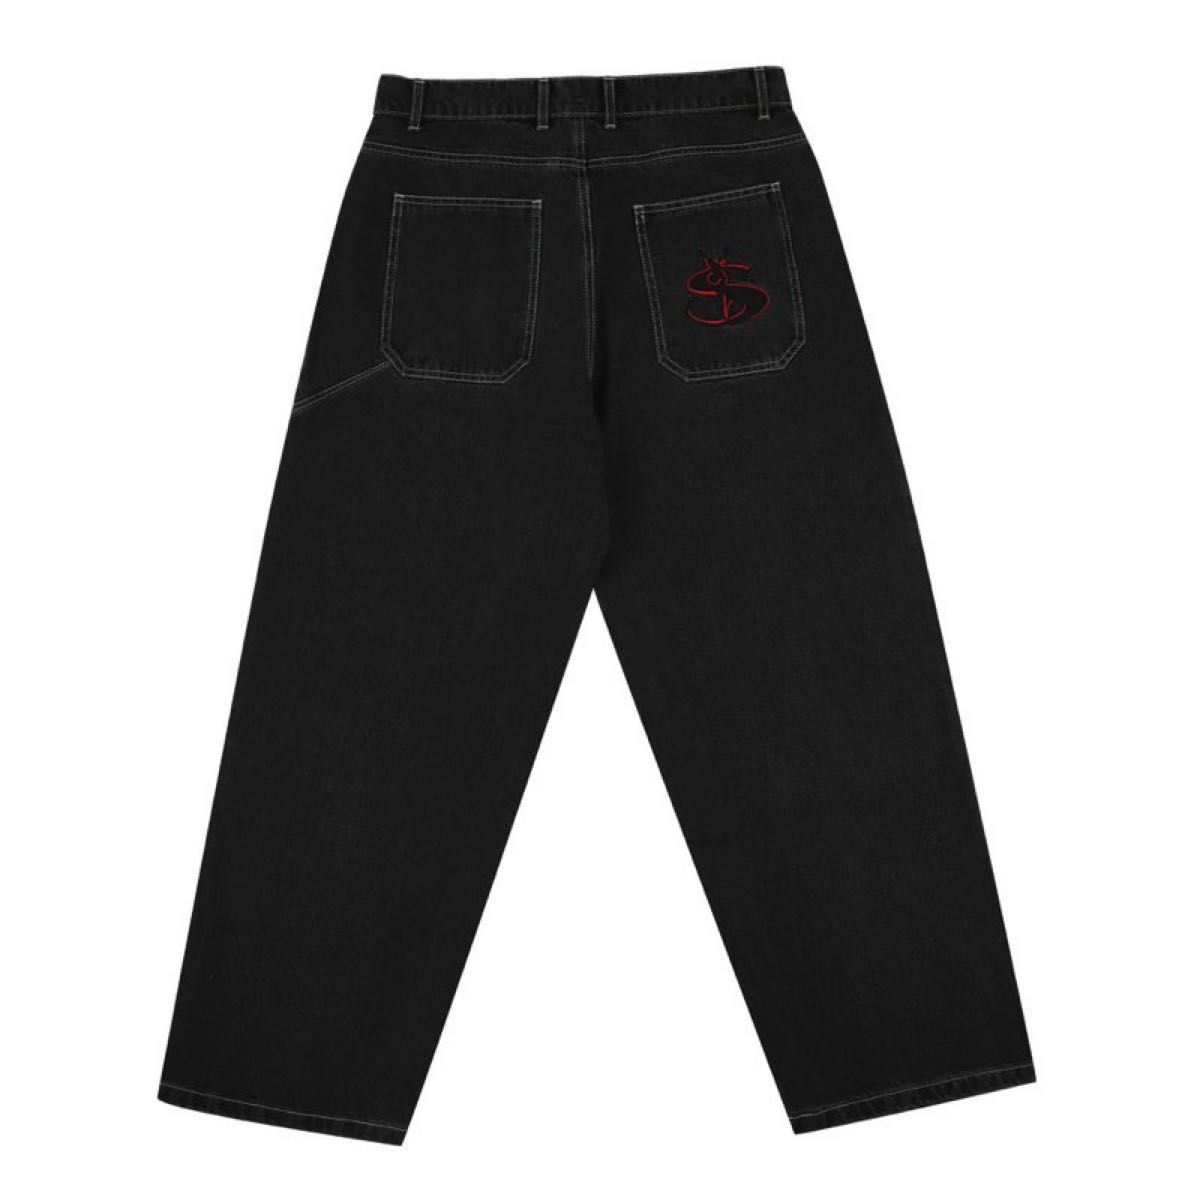 Yardsale Phantasy Jeans black red Lサイズ 新品未使用 Yahoo!フリマ